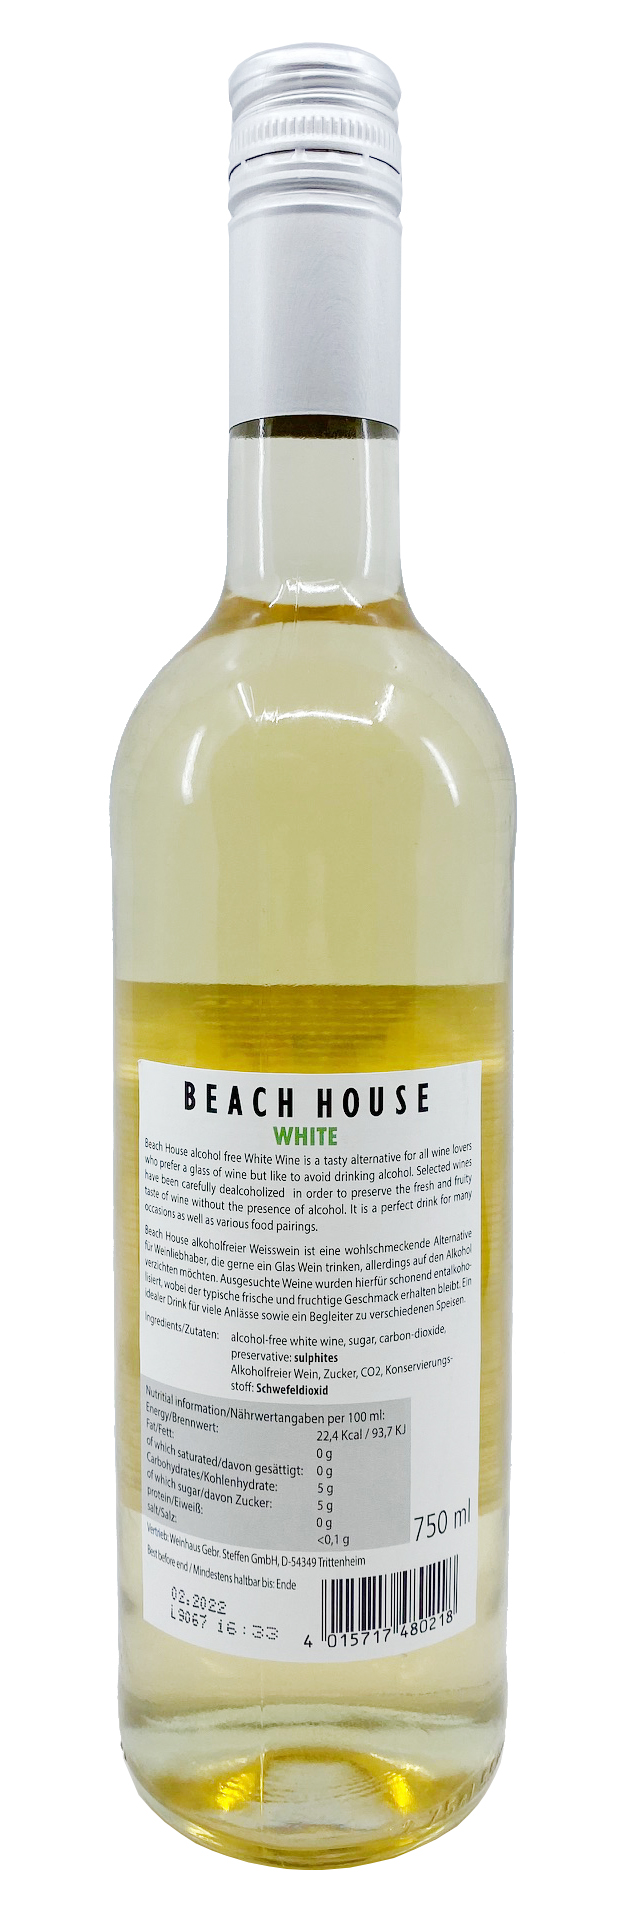 Beachhouse White alkoholfreier Weißwein Fresh & Fruity 0,75l